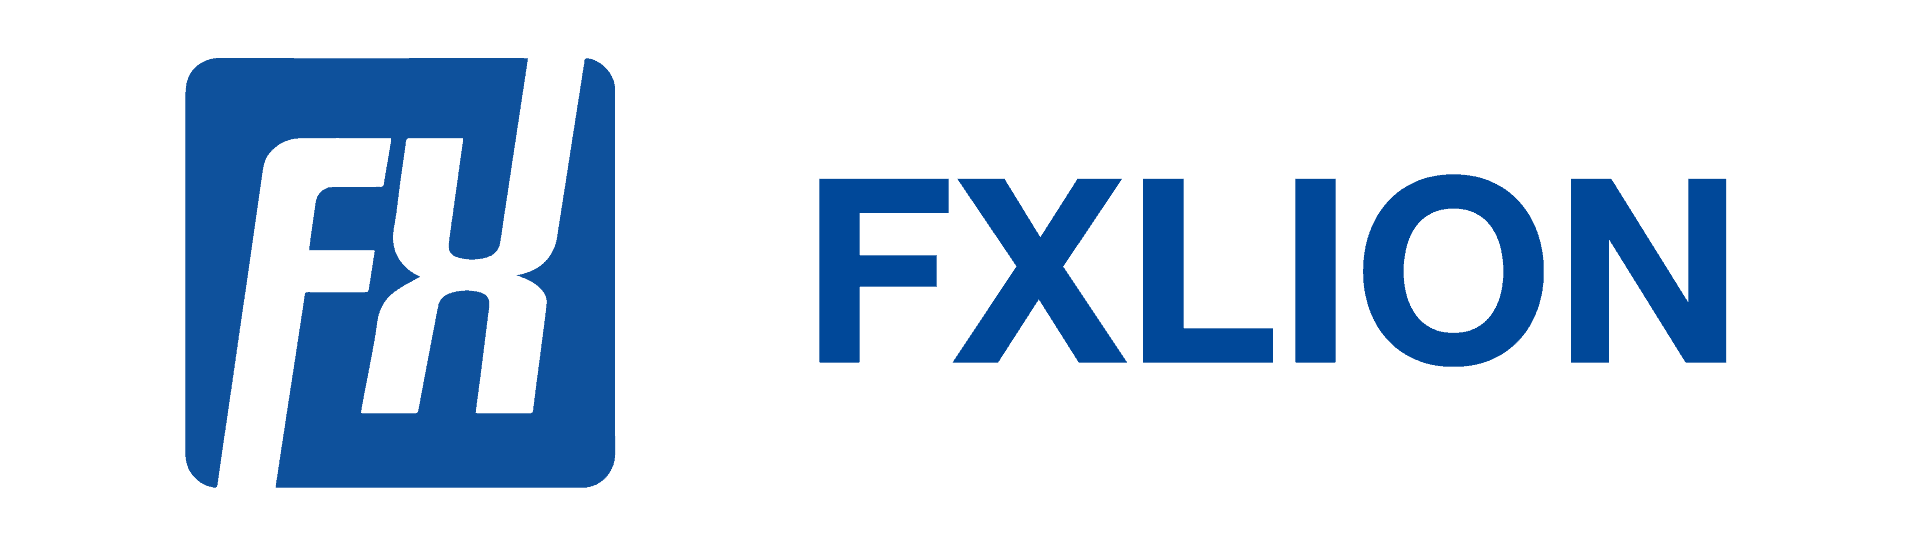 FxLion logo